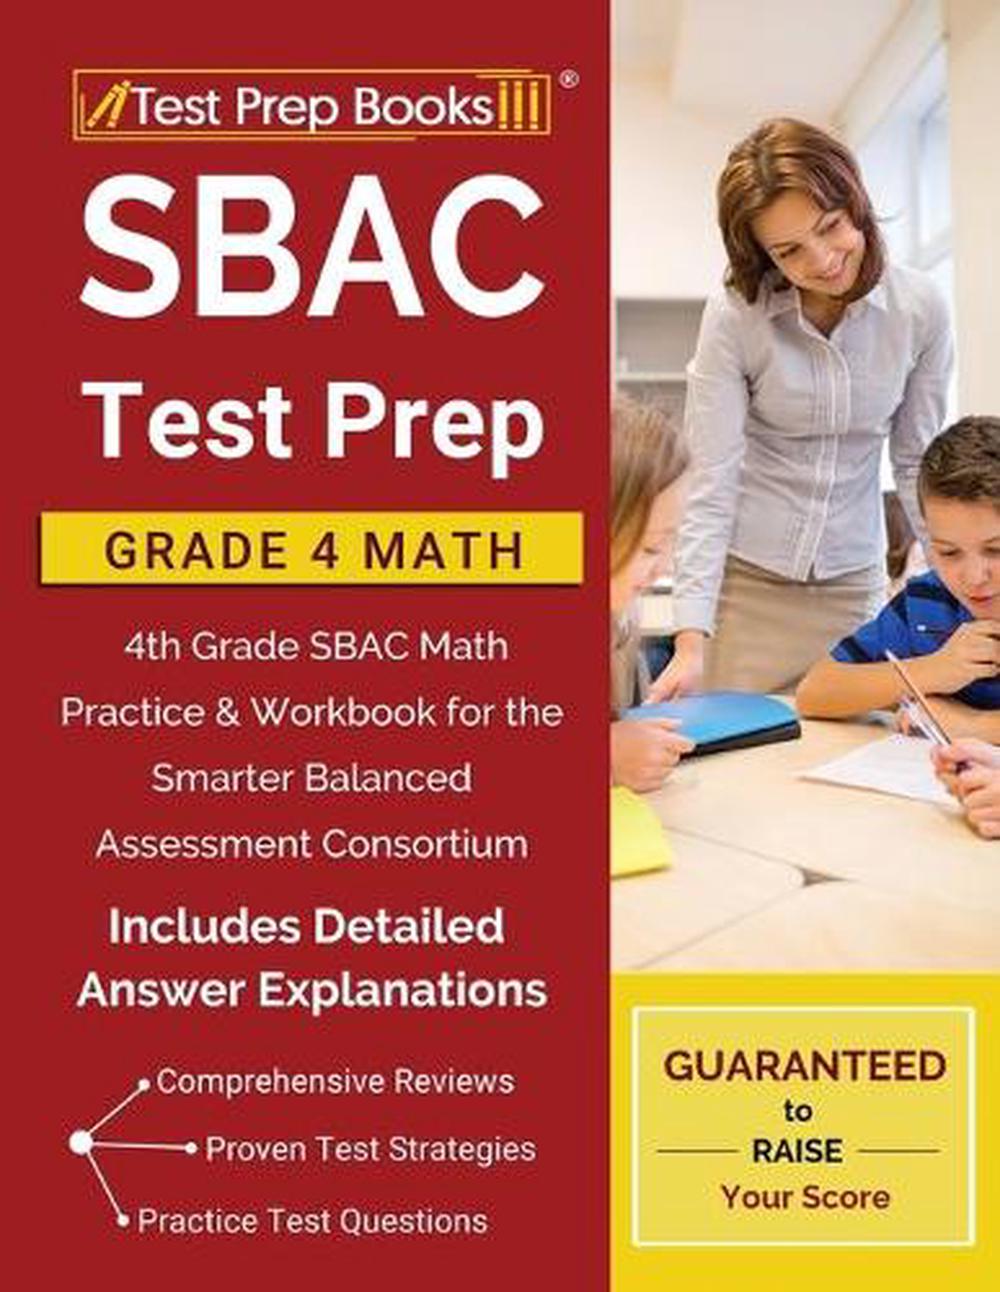 SBAC Test Prep Grade 4 Math 4th Grade SBAC Math Practice & Workbook